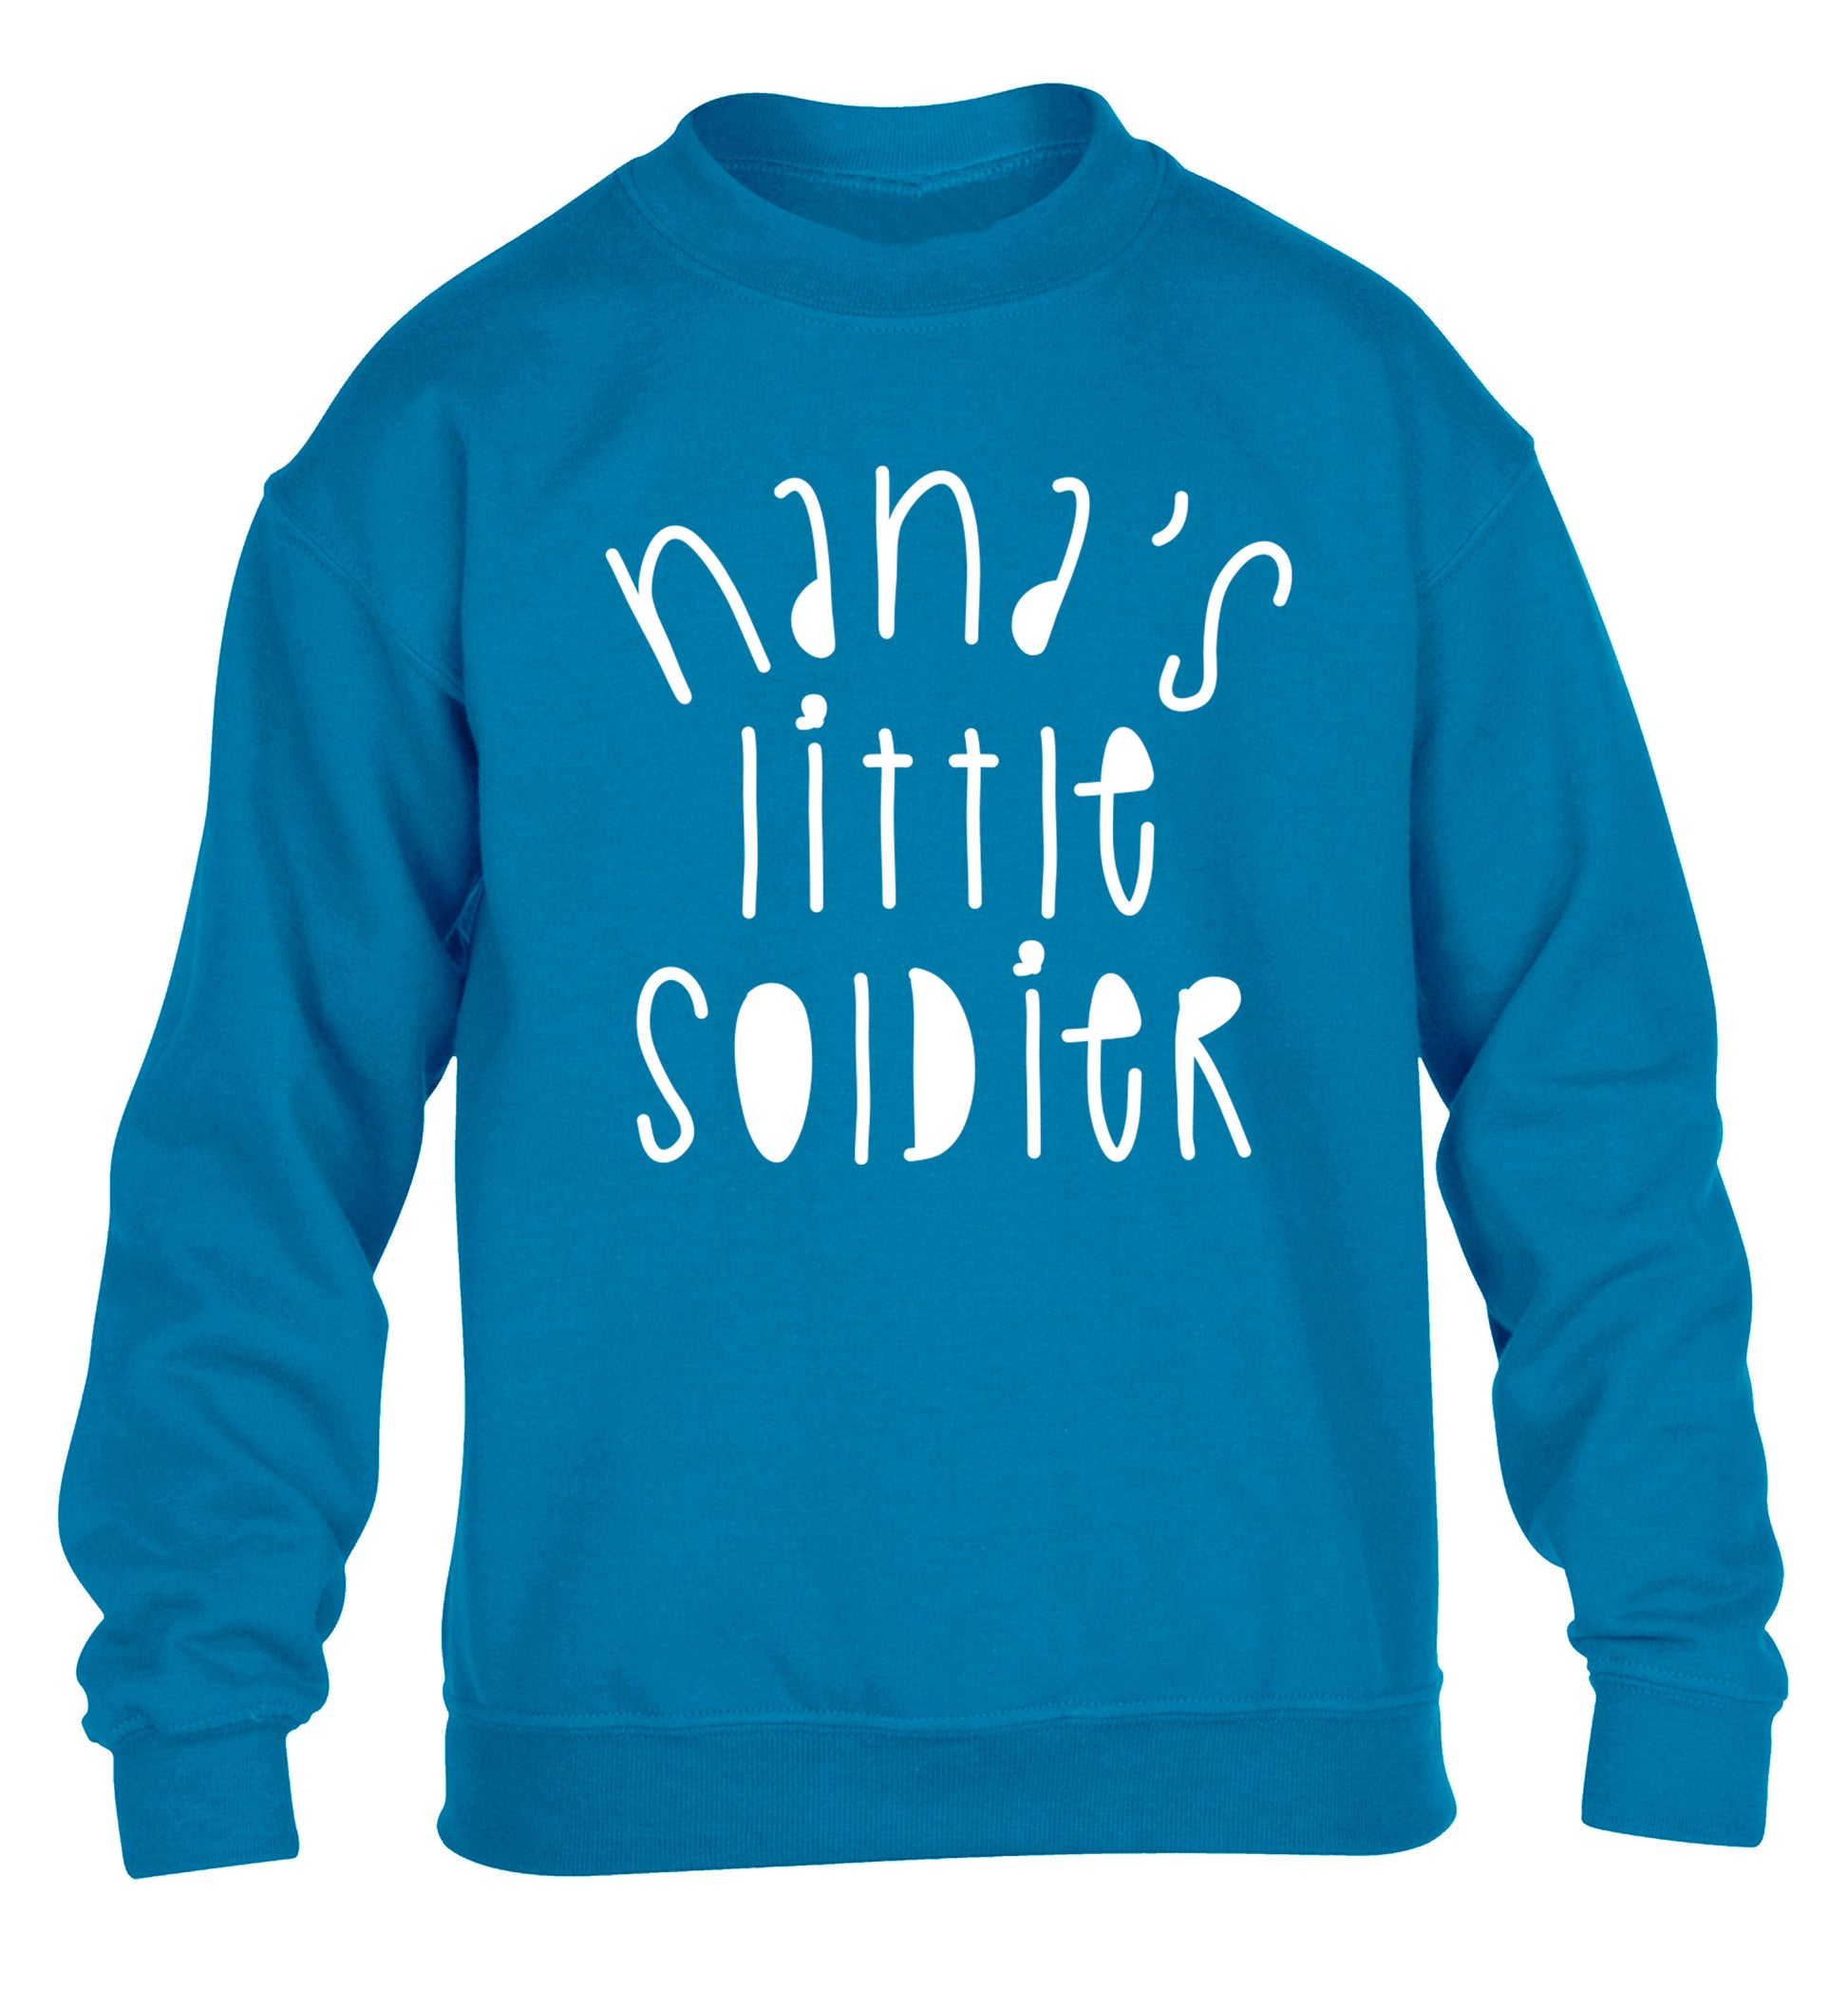 Nana's little soldier children's blue sweater 12-14 Years